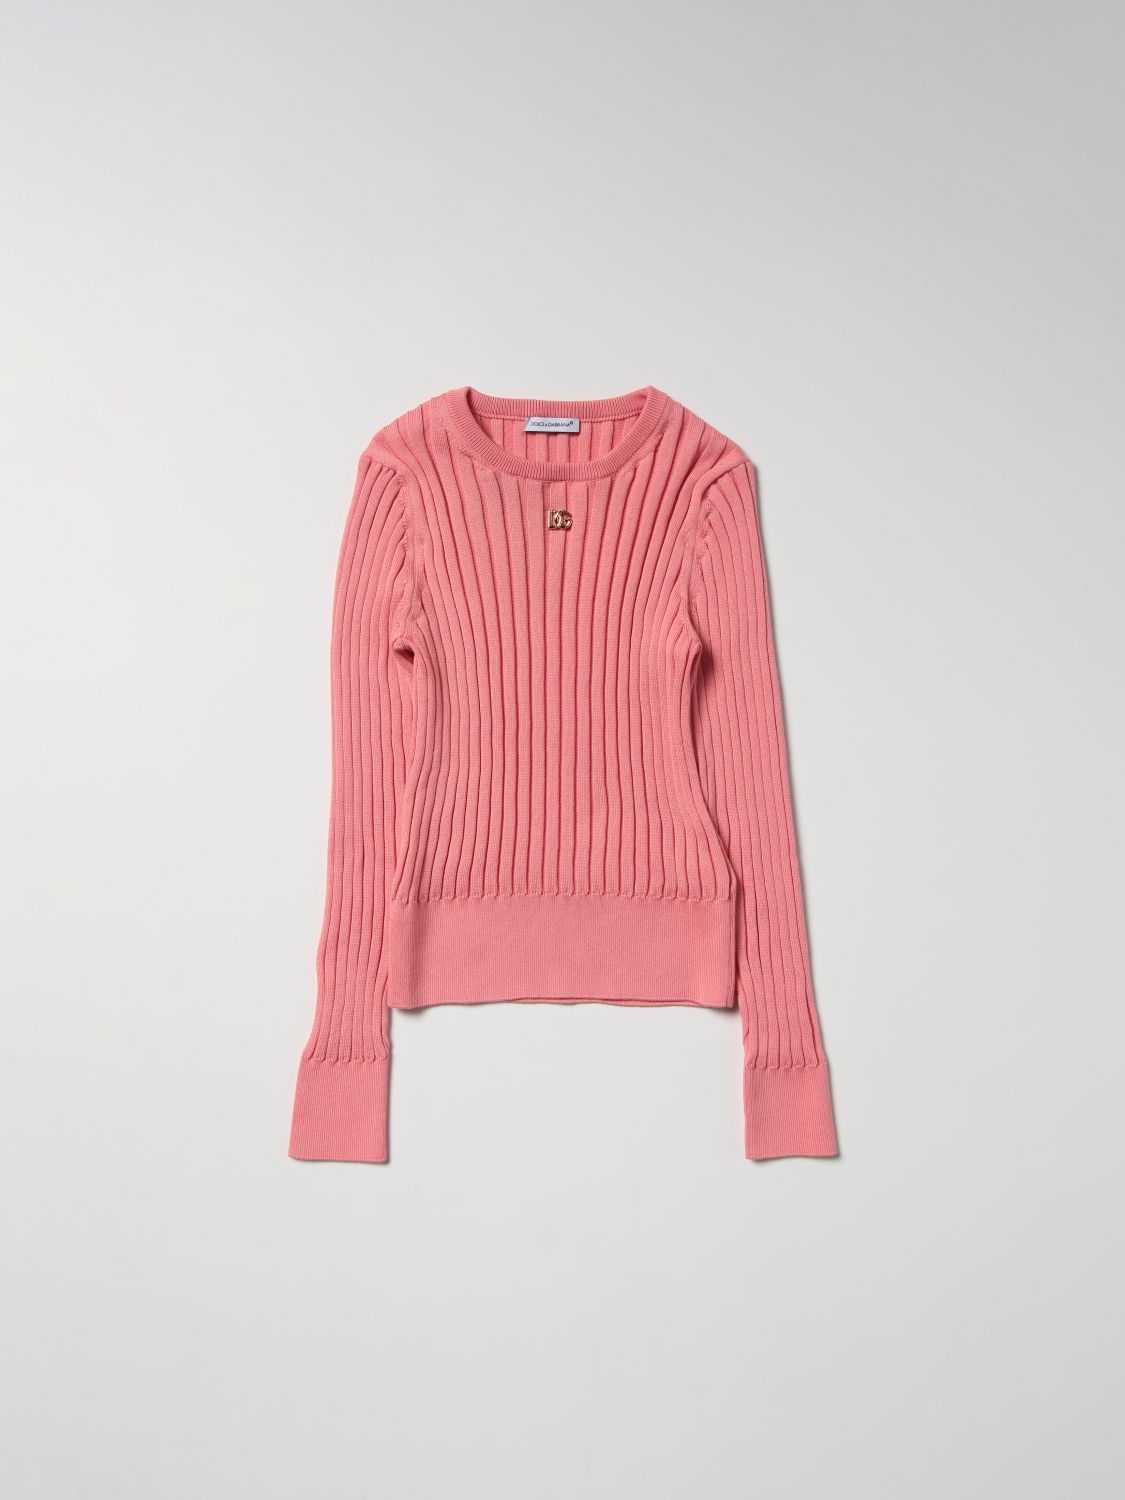 DOLCE & GABBANA: sweater for girls - Pink | Dolce & Gabbana sweater  L5KWG2JACMT online on 